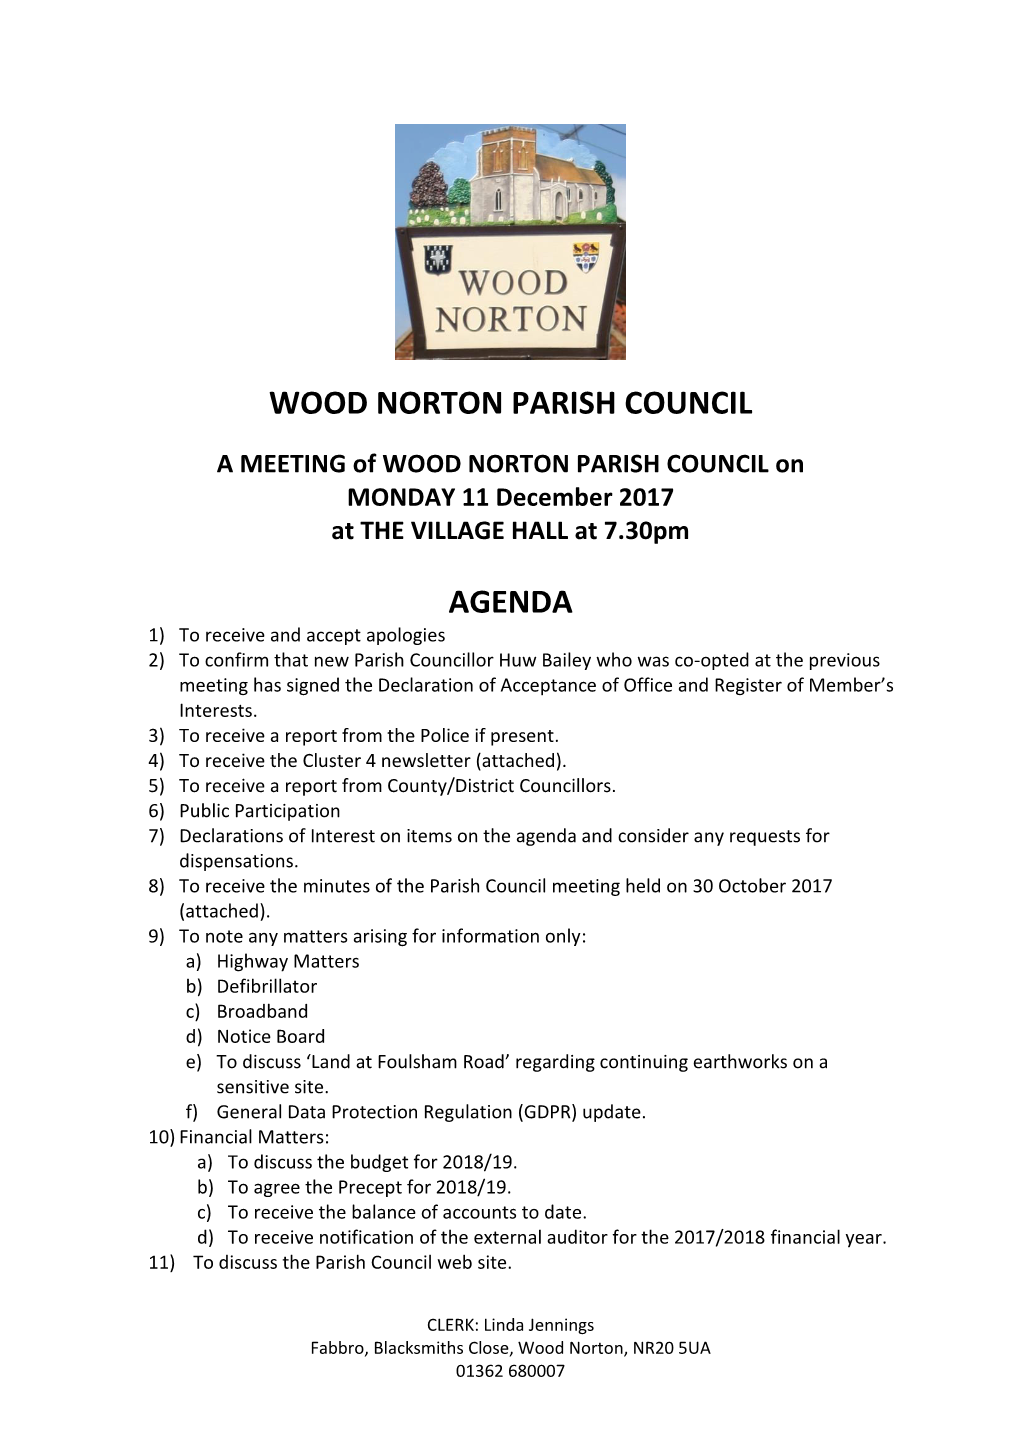 Wood Norton Parish Council Agenda